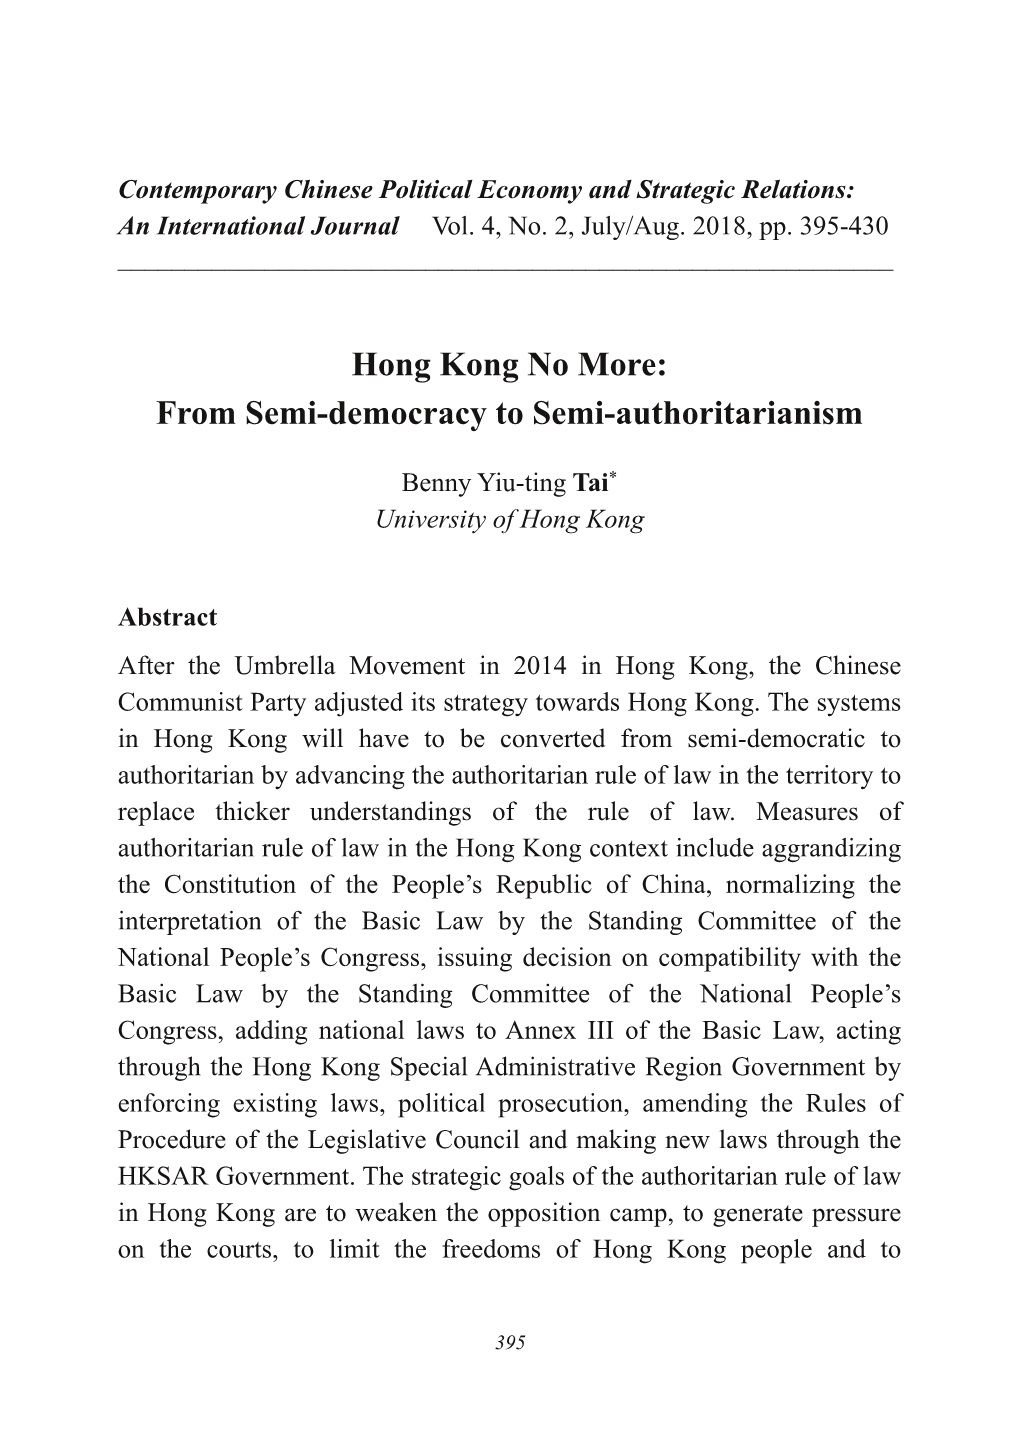 Hong Kong No More: from Semi­Democracy to Semi­Authoritarianism